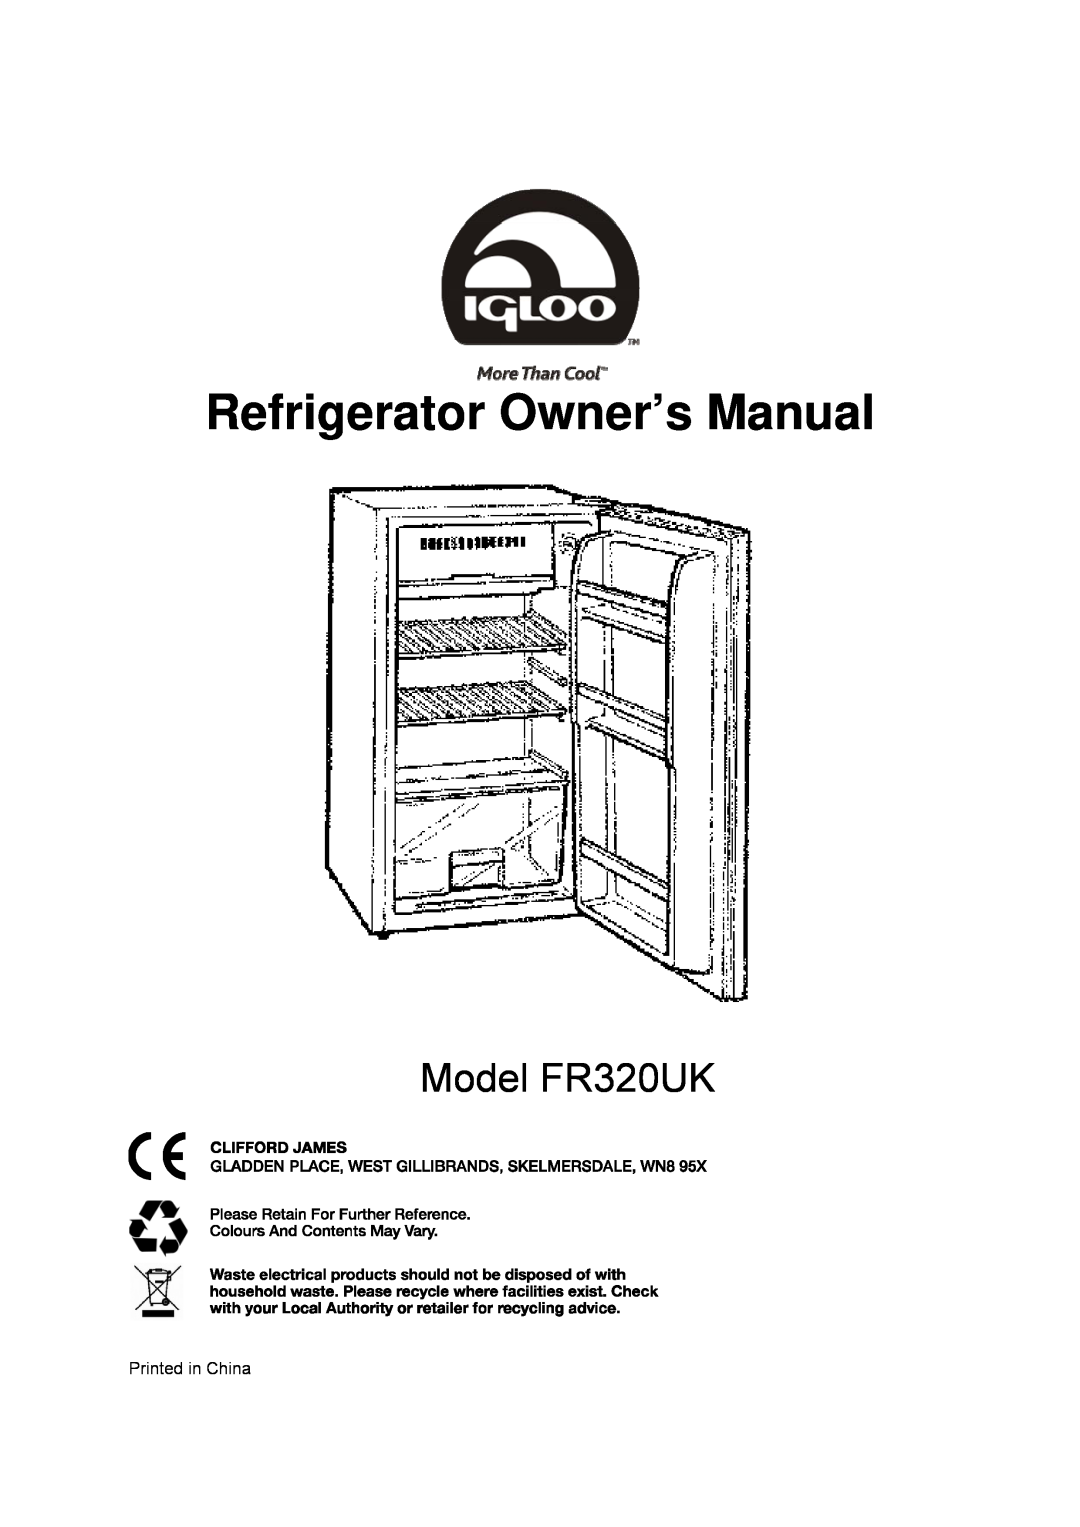 Igloo owner manual Model FR320UK 